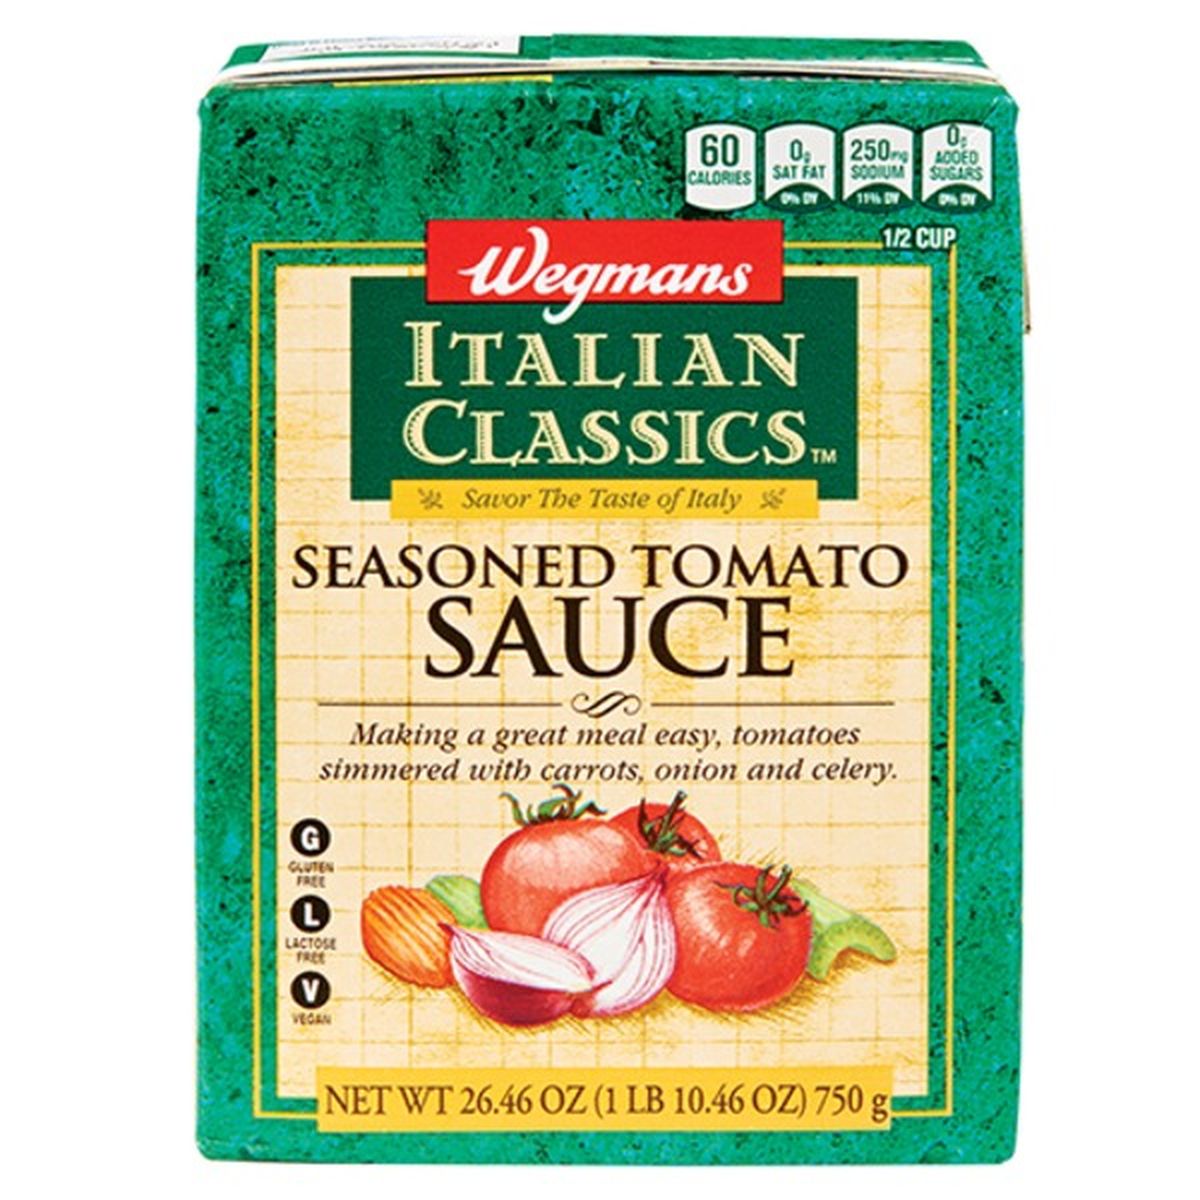 Calories in Wegmans Italian Classics Seasoned Tomato Sauce